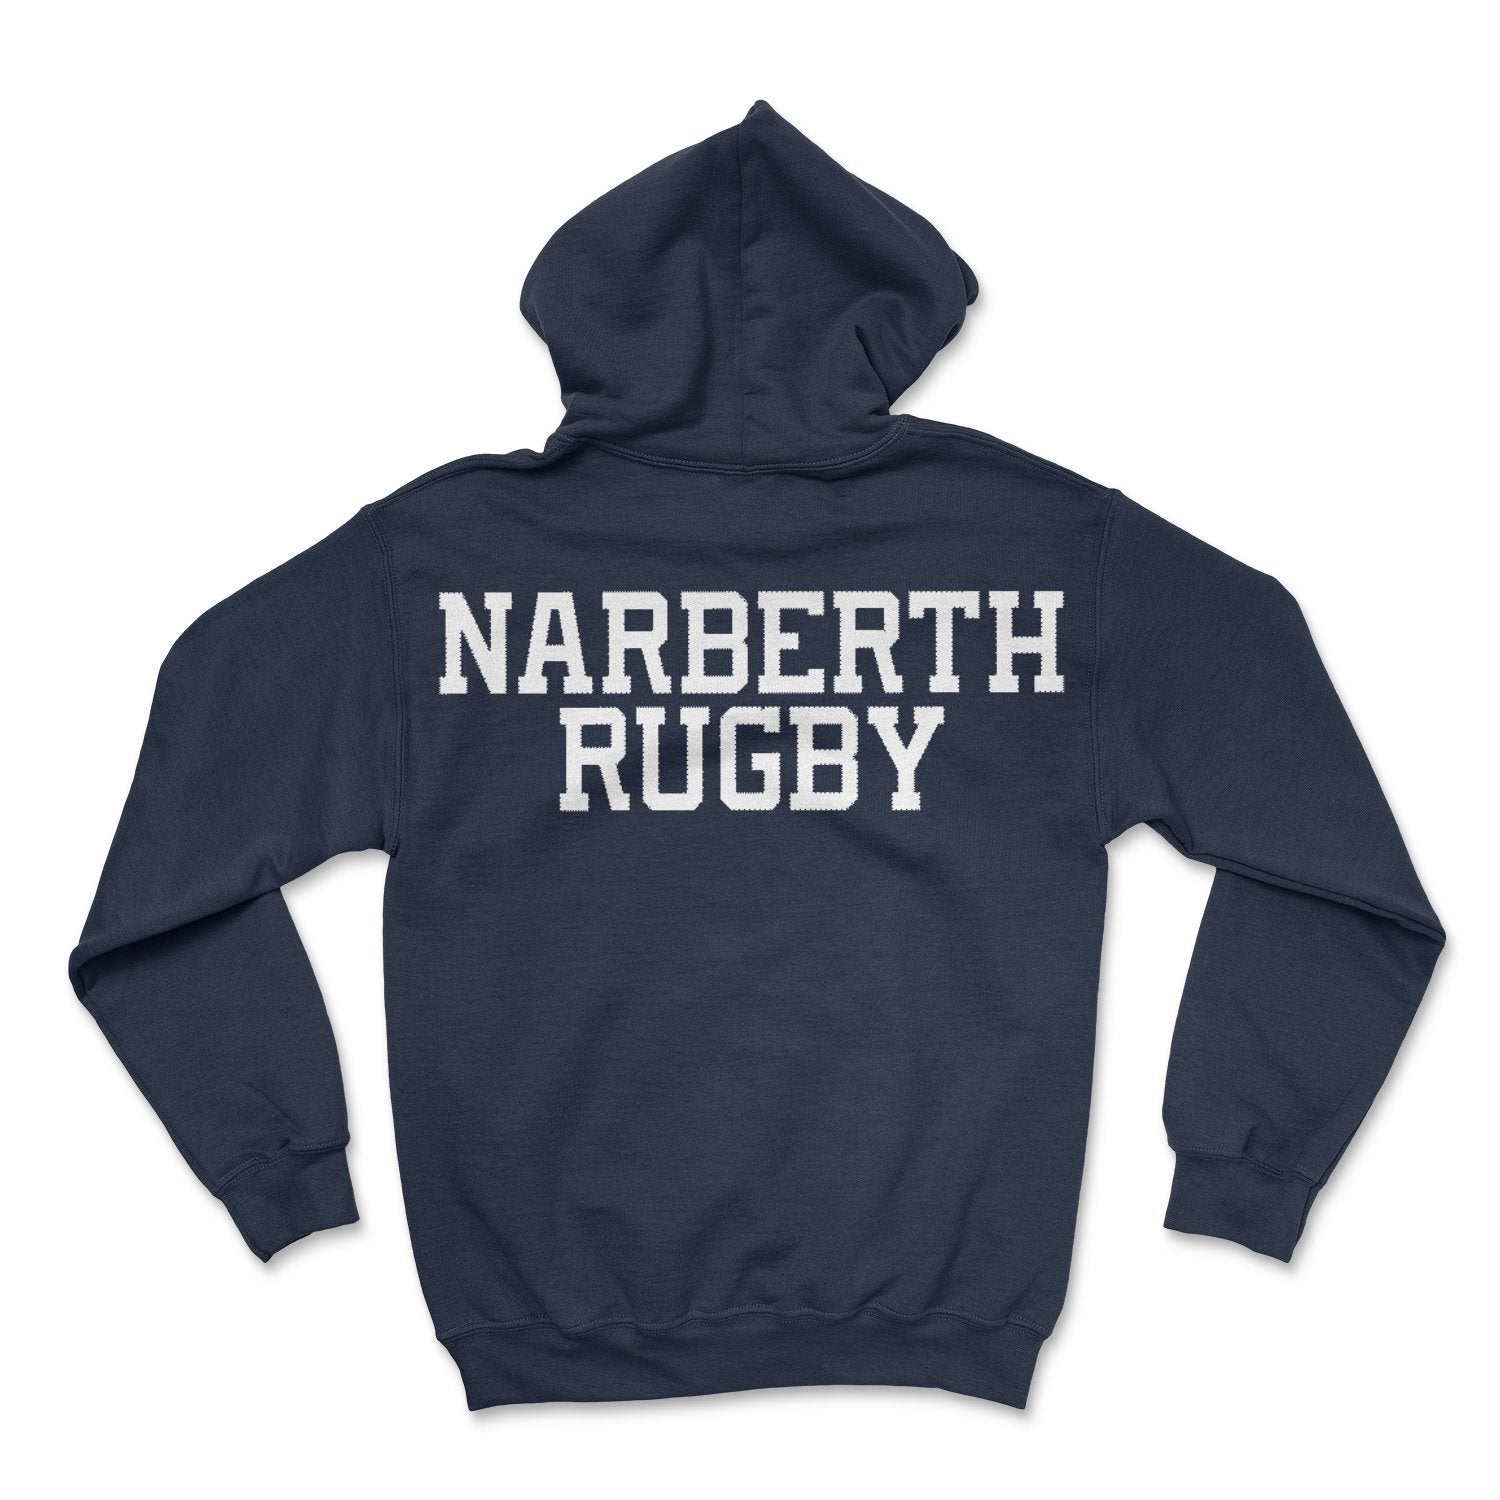 Narberth Rugby Hoody Sweatshirt